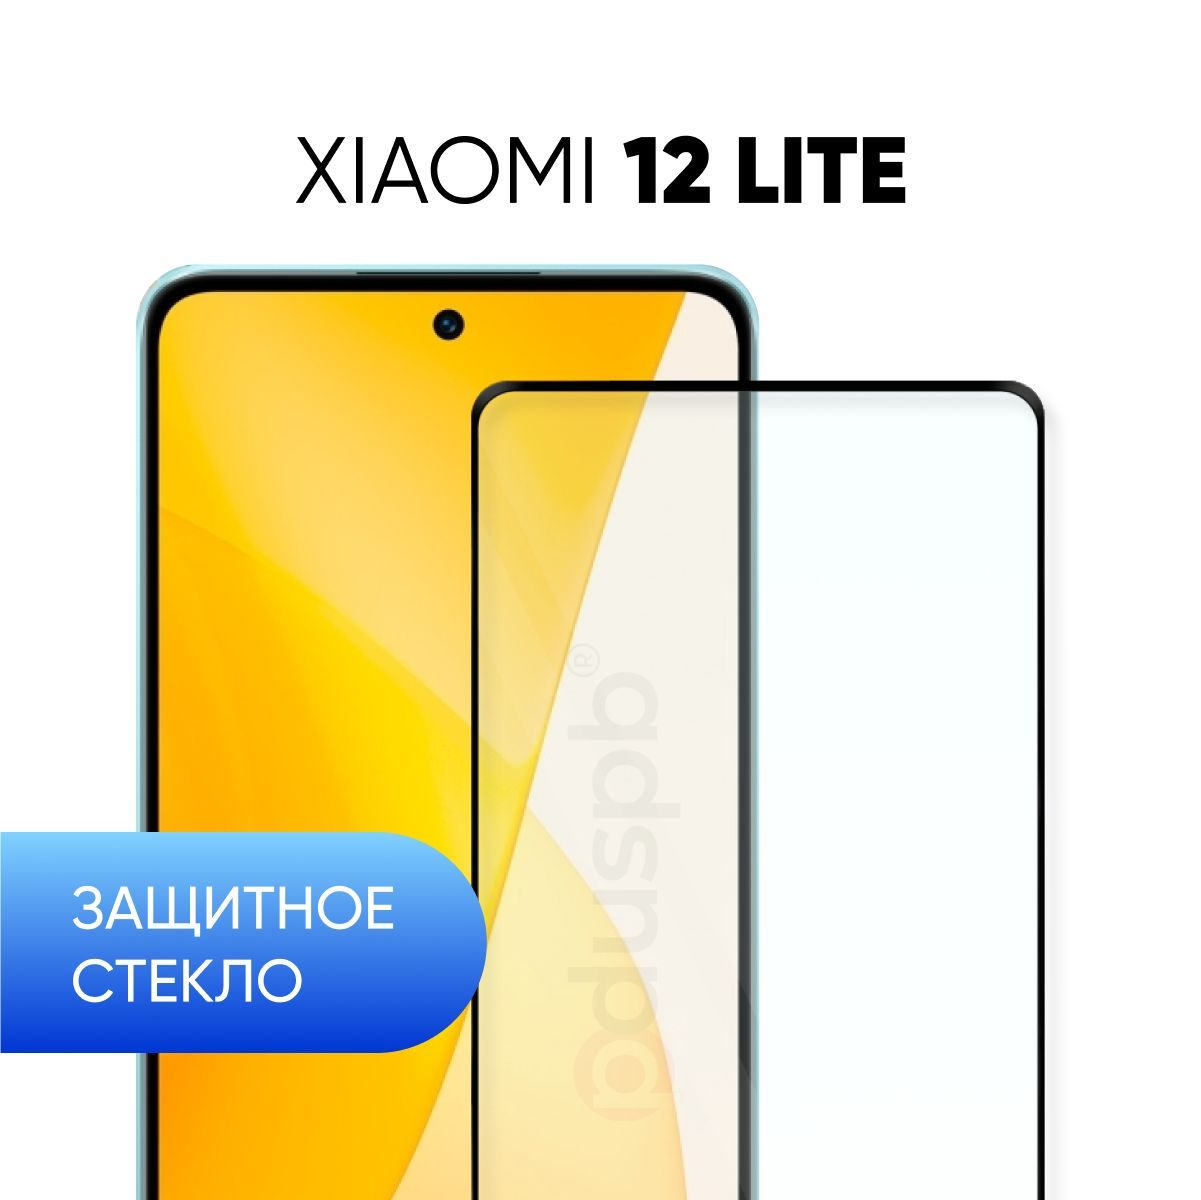 Xiaomi 12 lite стекло